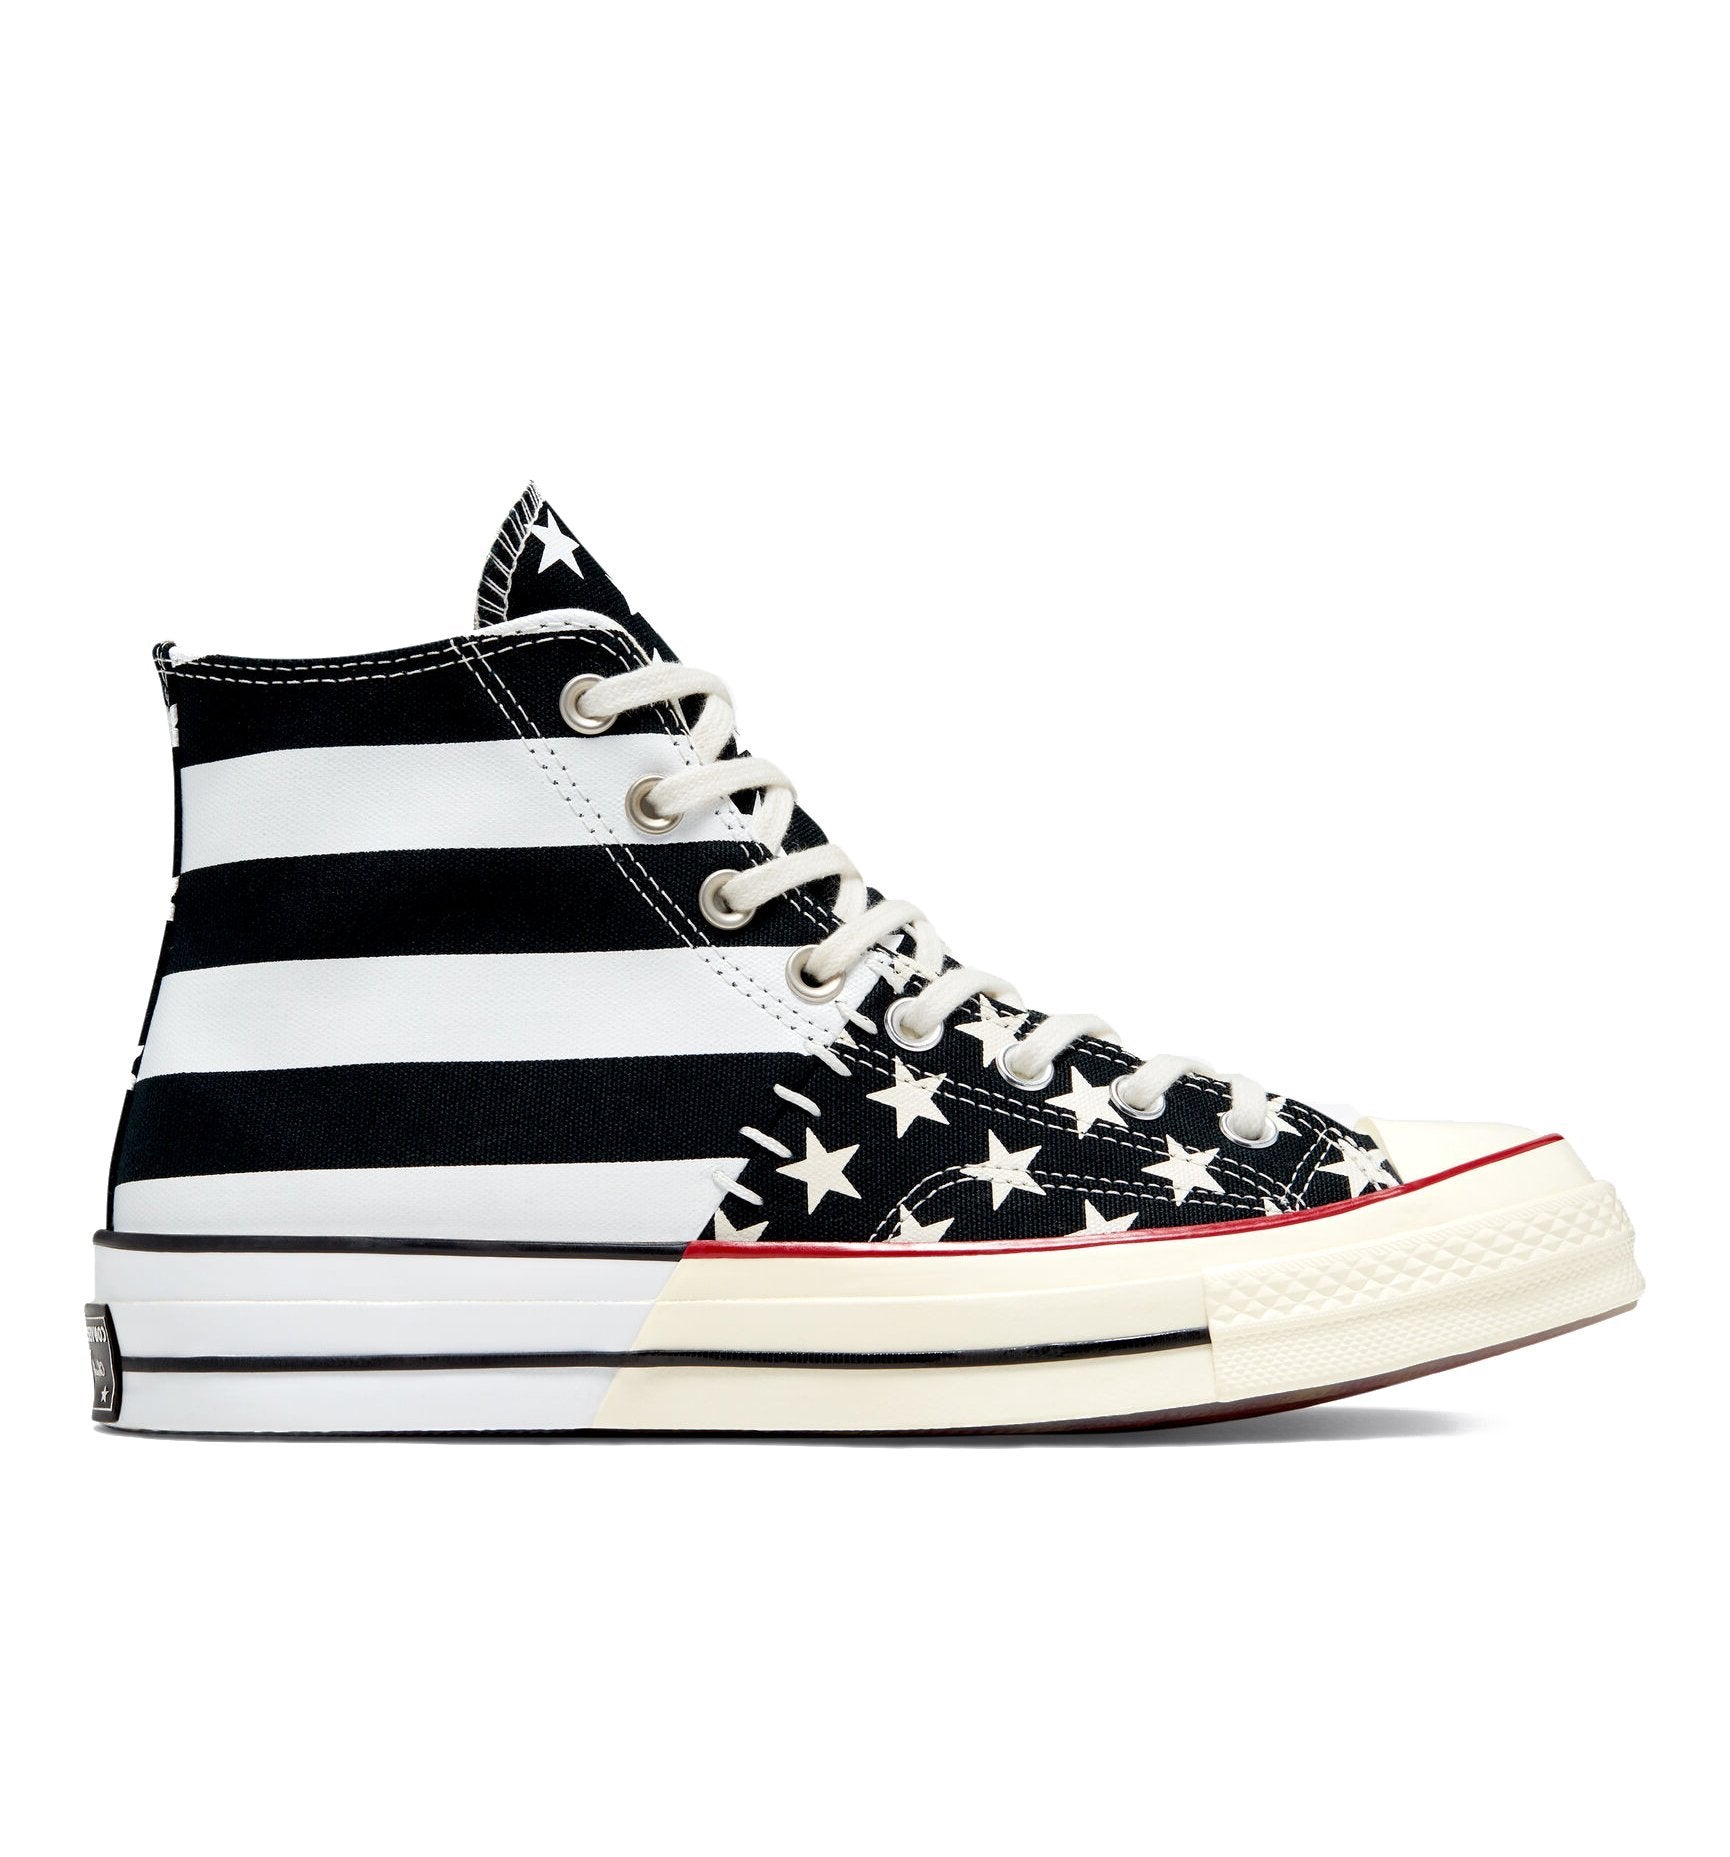 Shop latest Converse sneakers online 